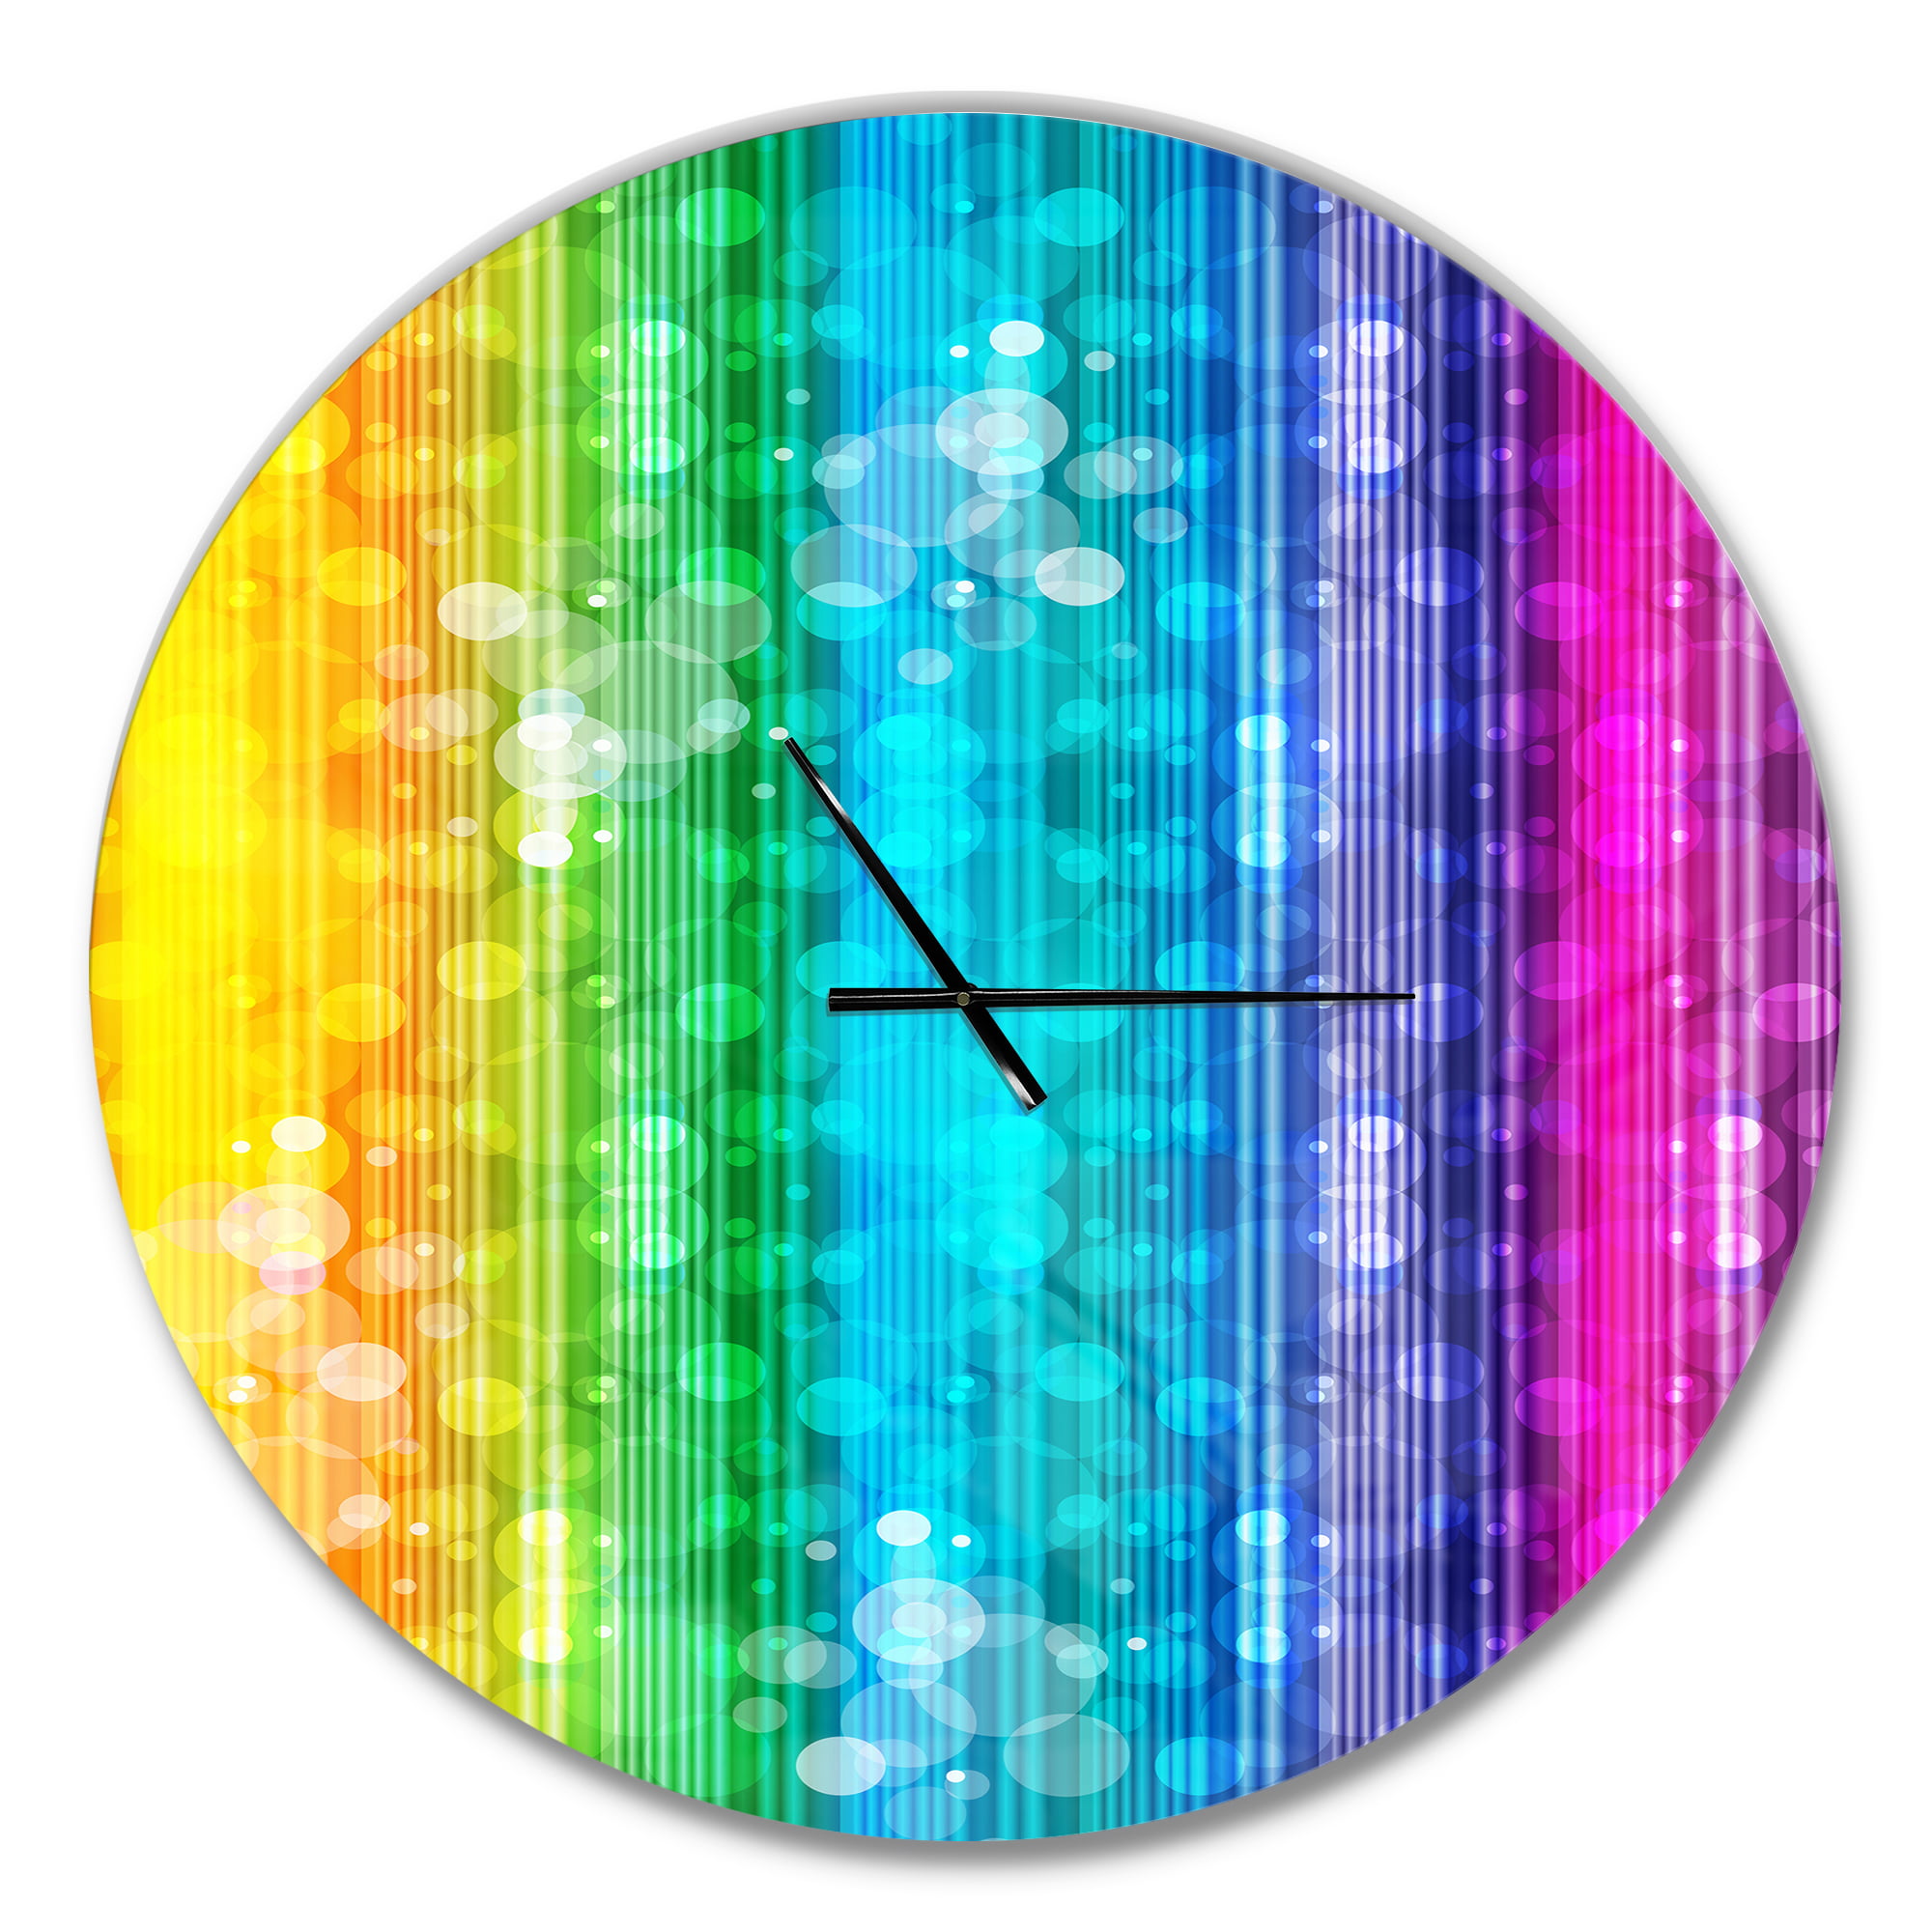 12-Inch Kess InHouse Vasare NAR Just Do It Tan Rainbow Wall Clock